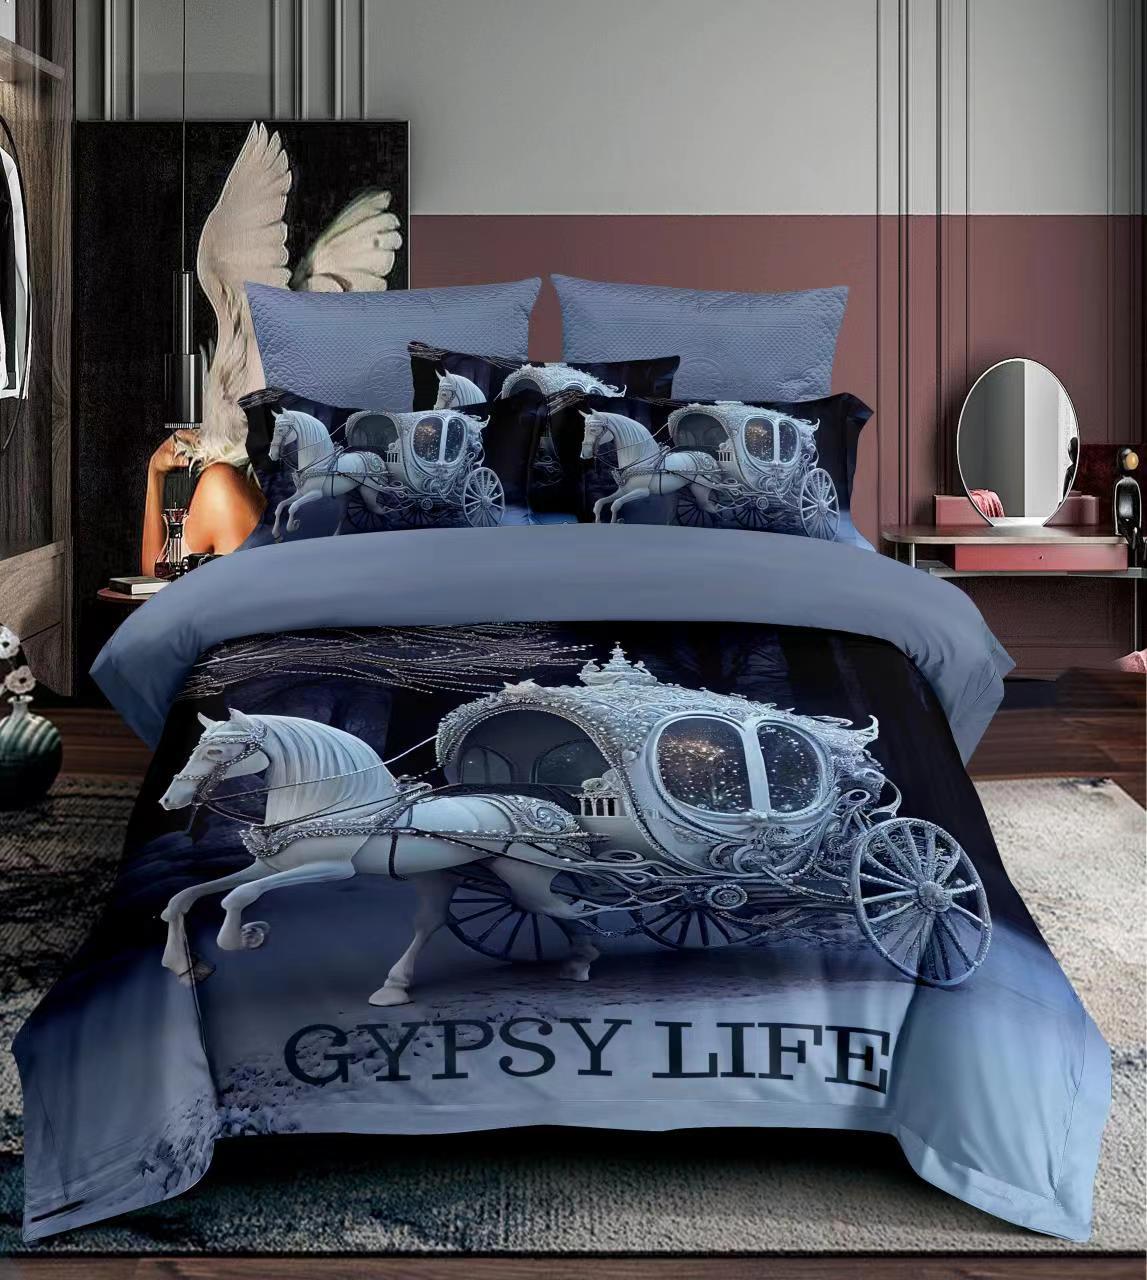 Gypsy life king size bedding